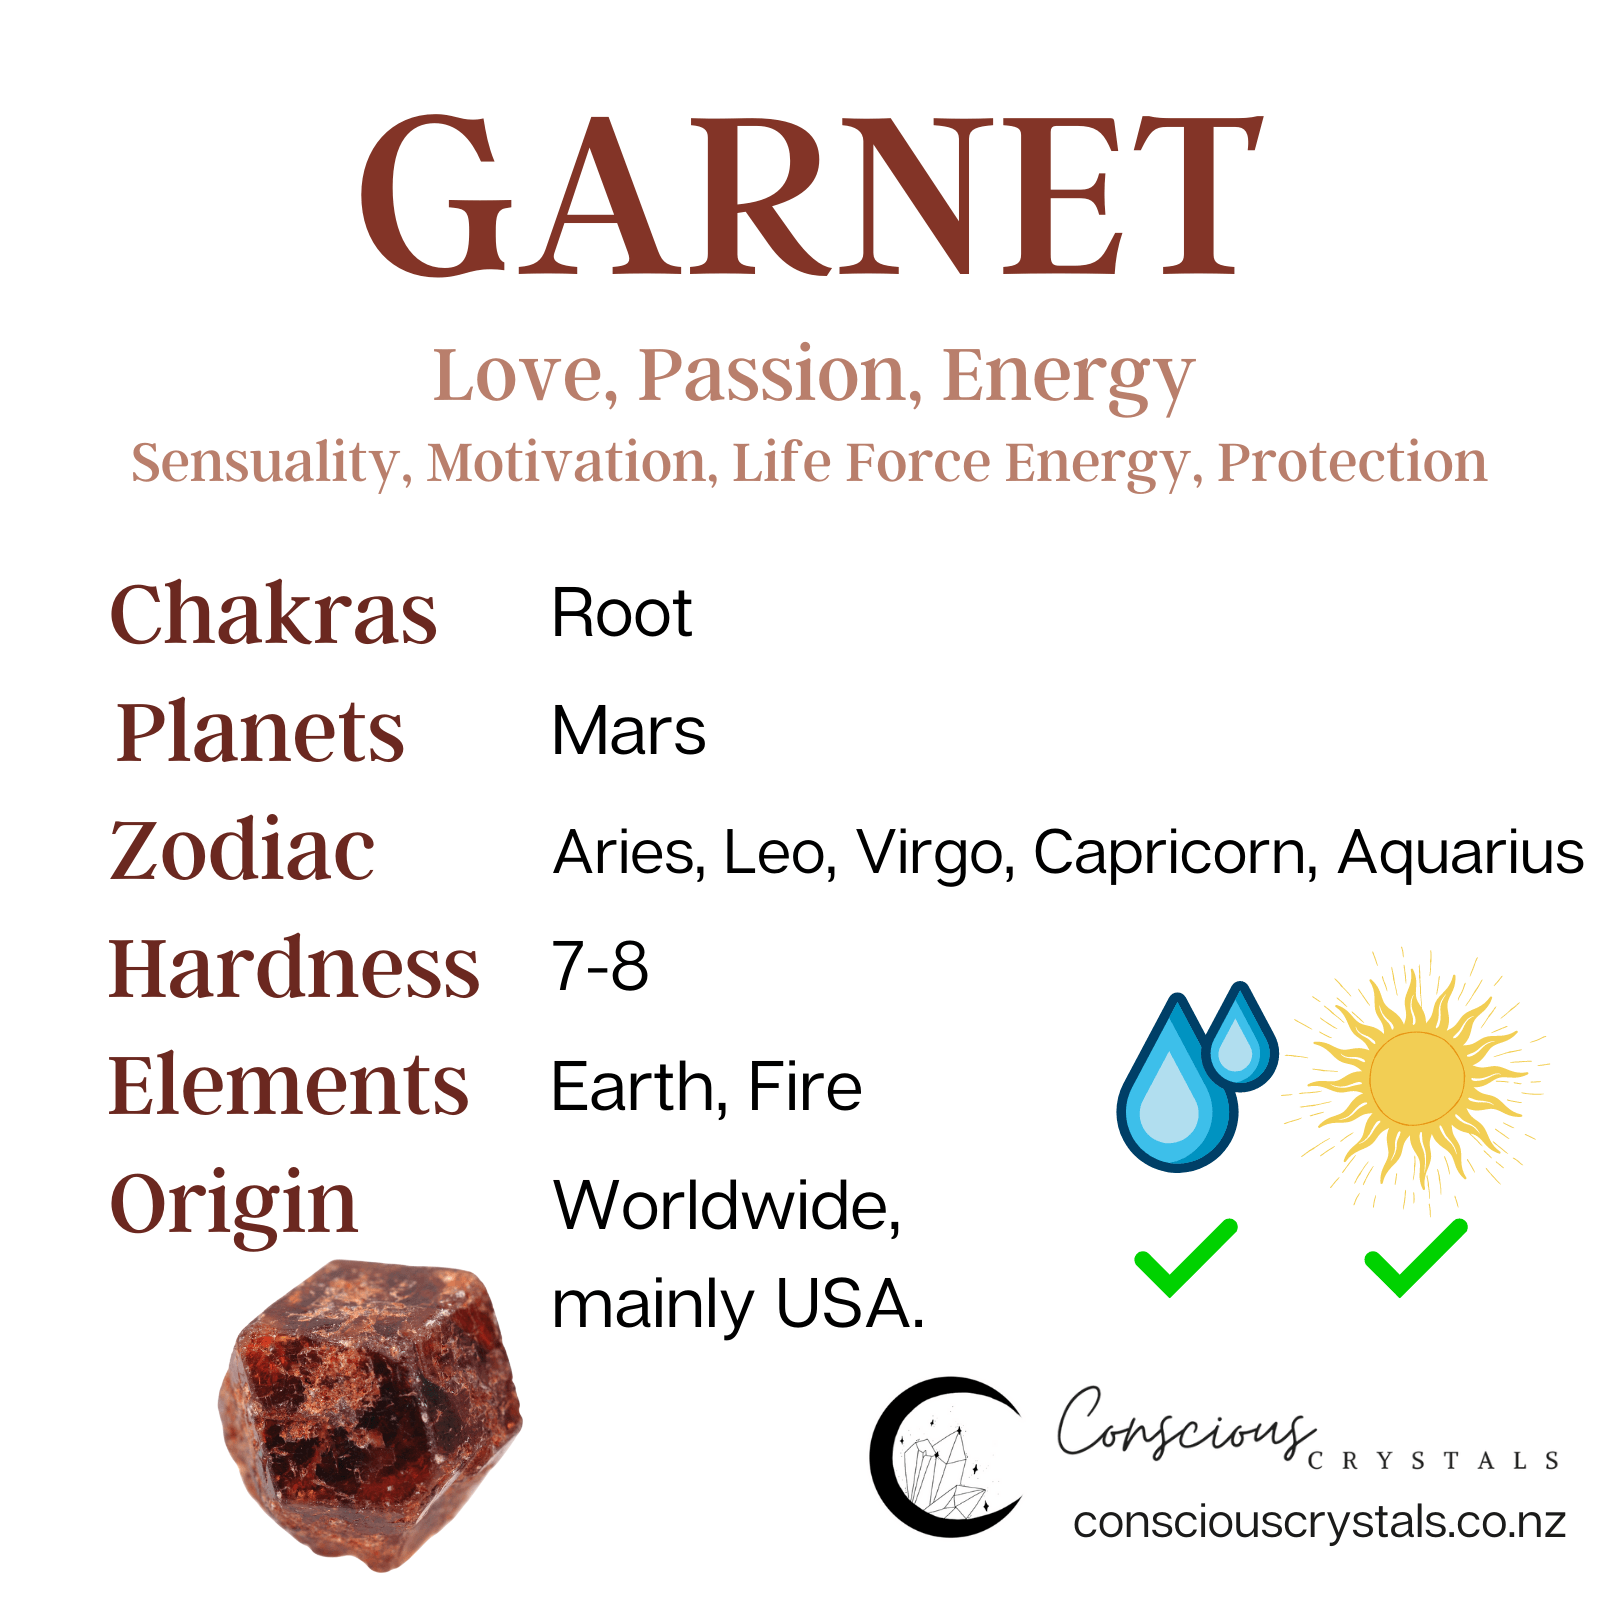 Garnet Raw - Conscious Crystals New Zealand Crystal and Spiritual Shop